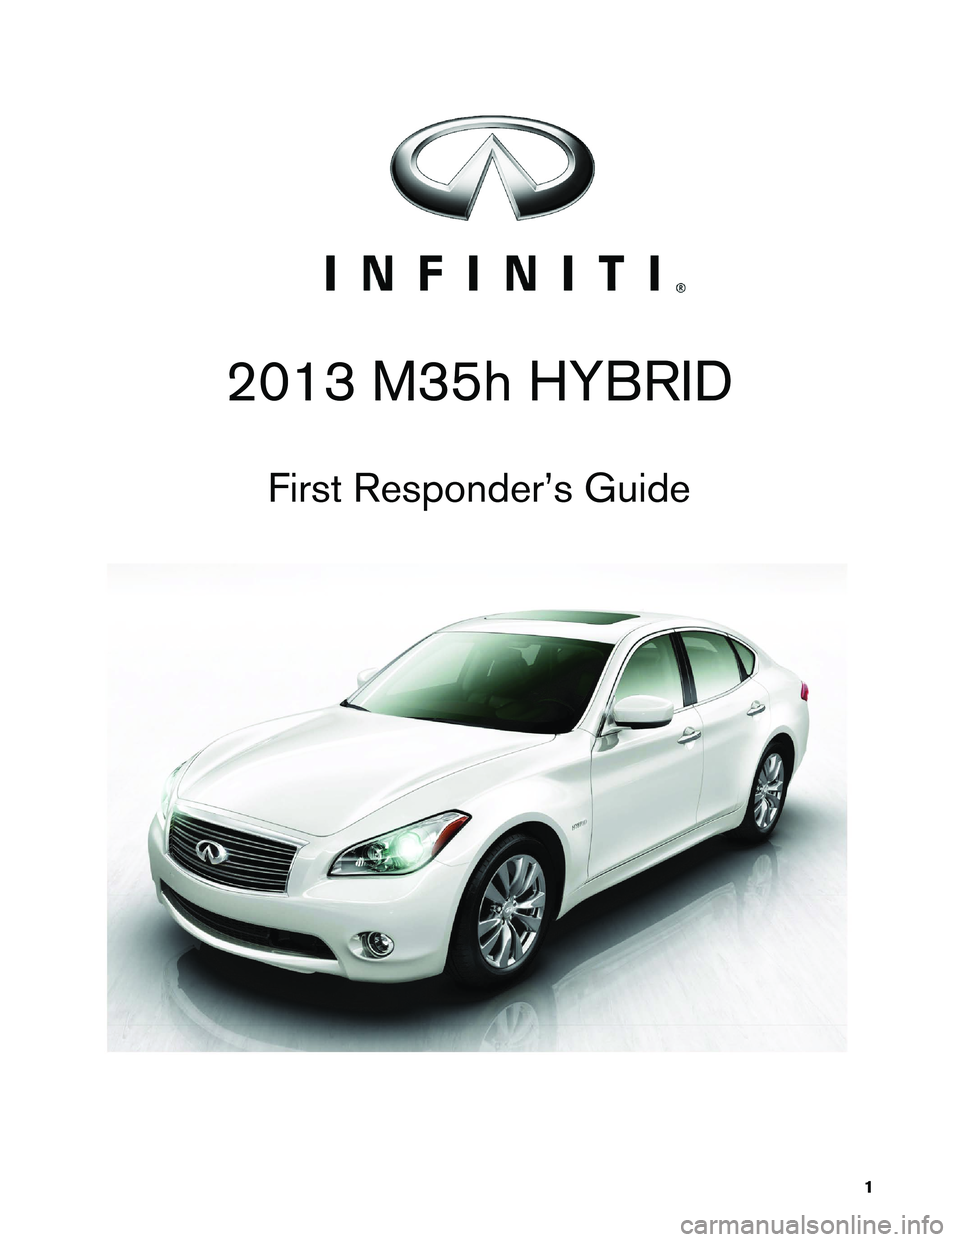 INFINITI M HYBRID 2013  First responder´s Guide 2013 M35h HYBRID
First Responder’s Guide 1   